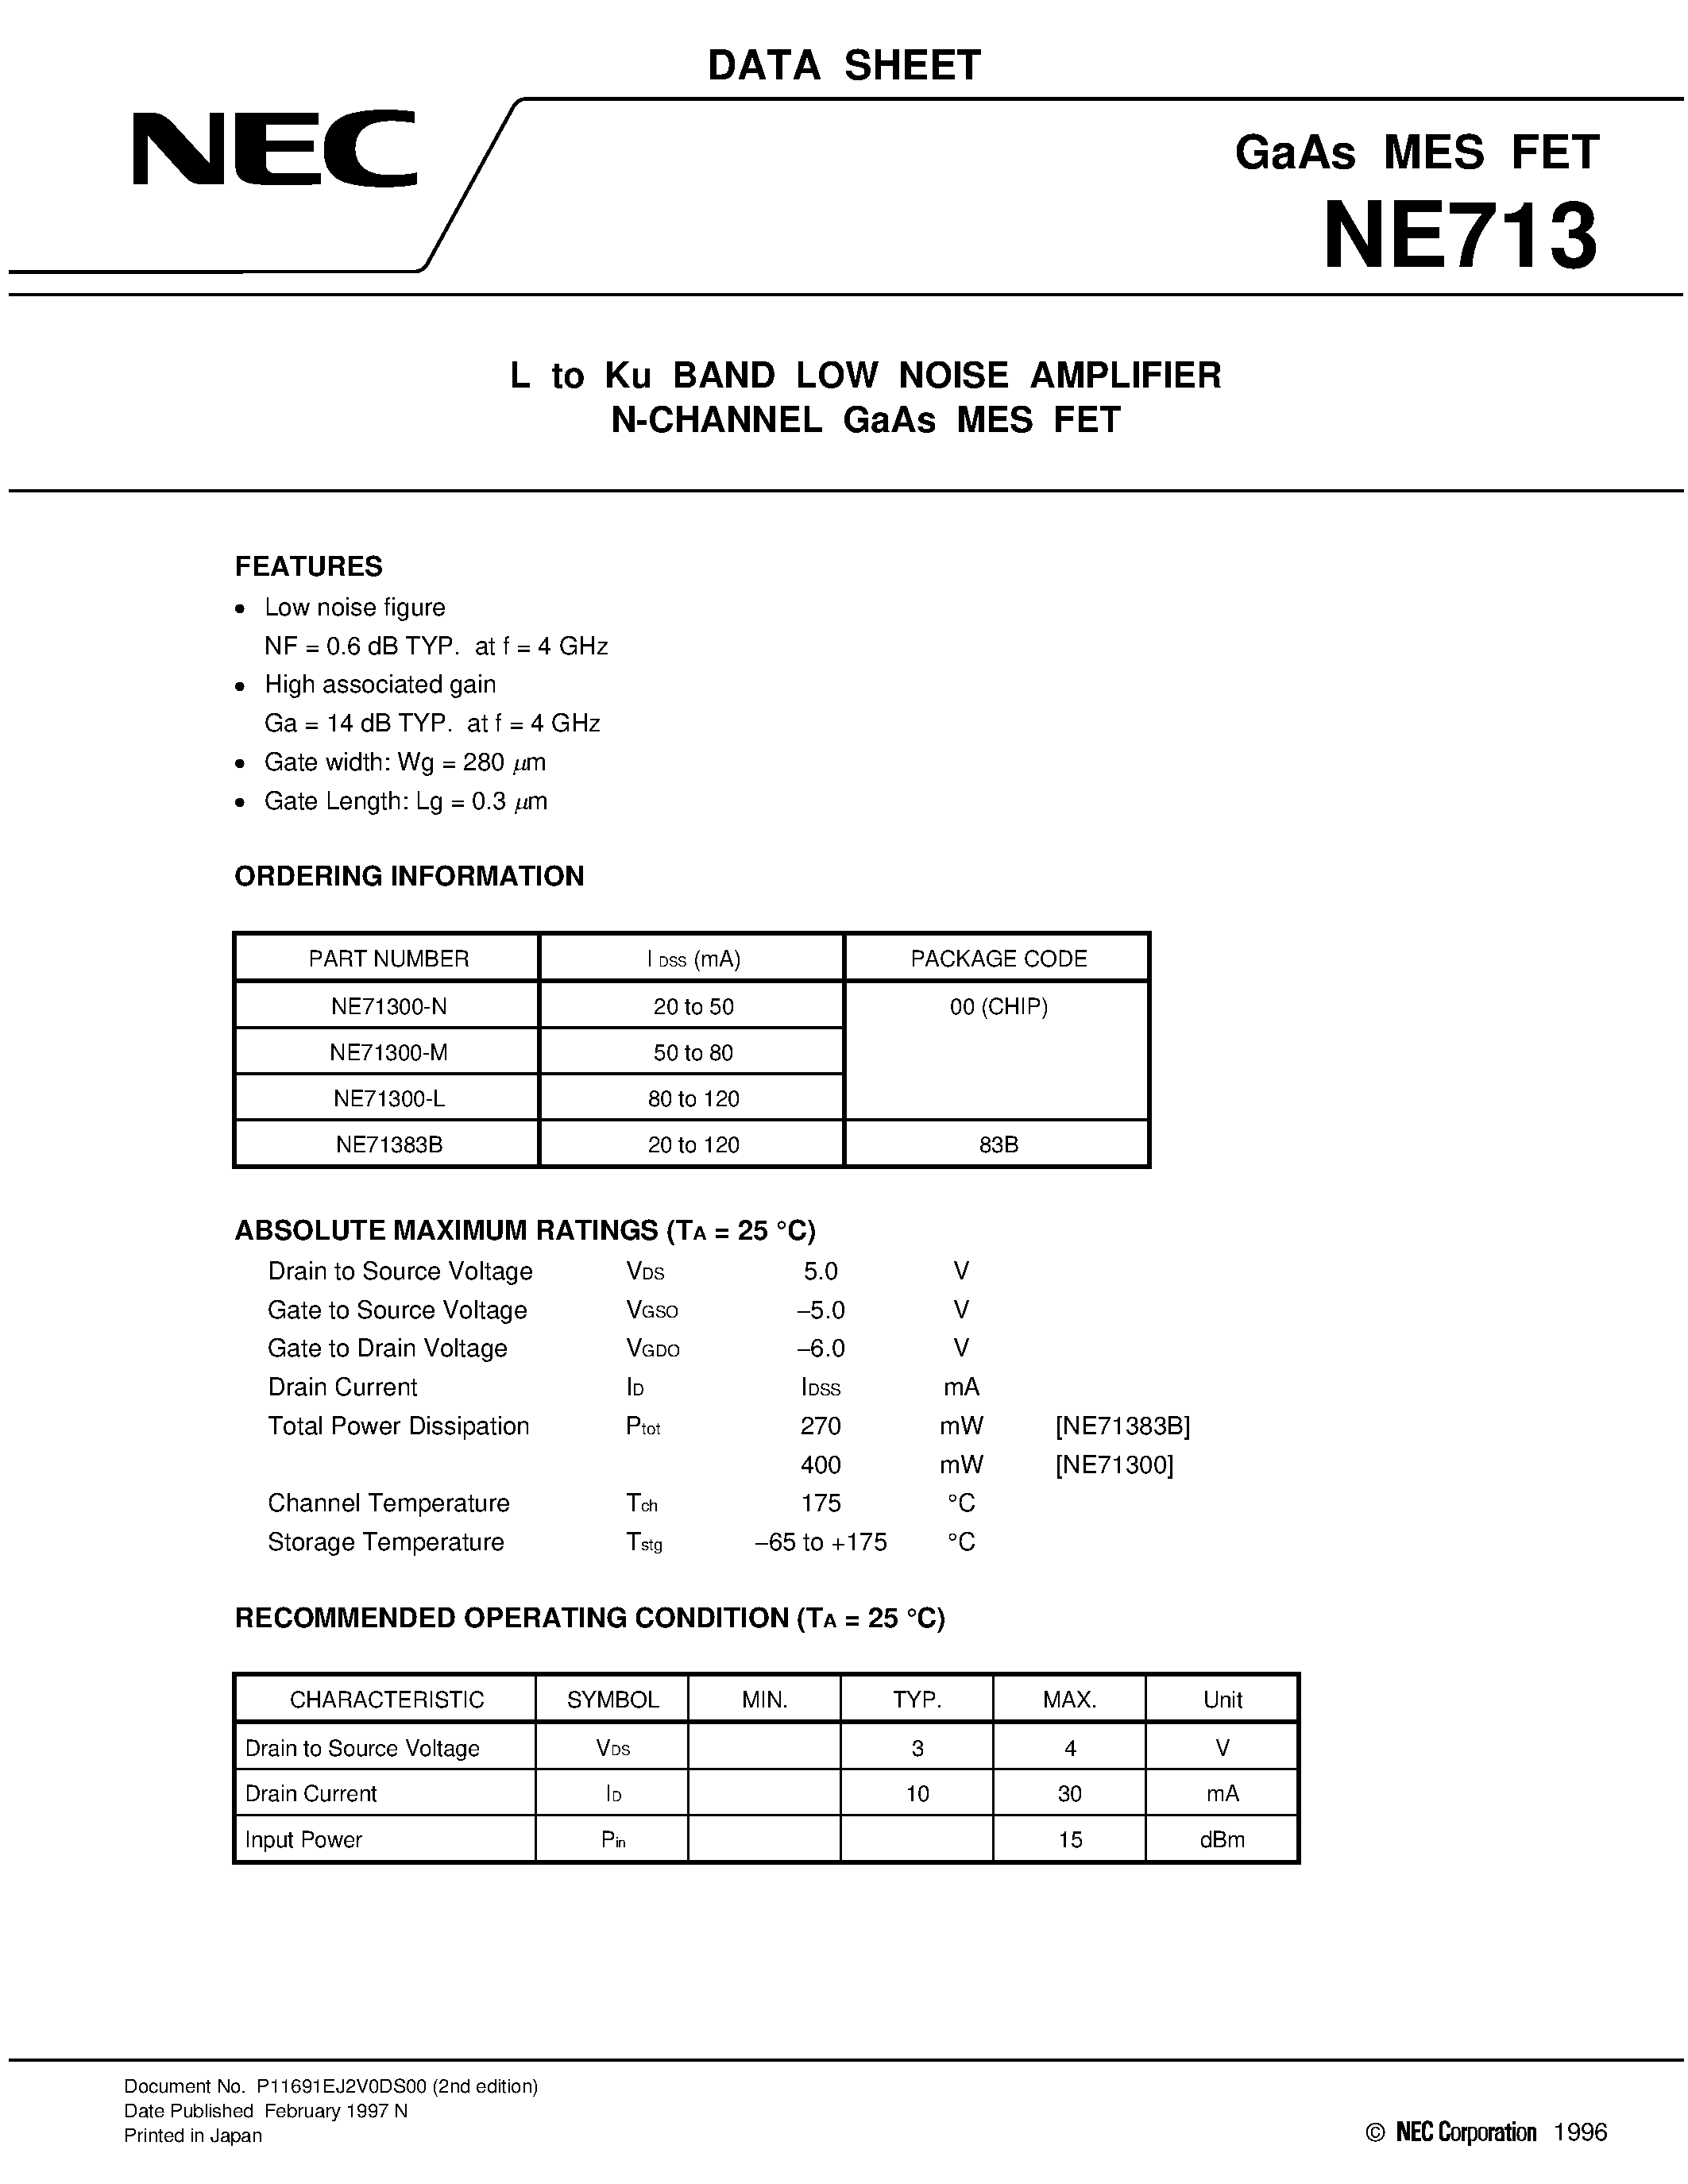 Datasheet NE71300-L - L to Ku BAND LOW NOISE AMPLIFIER N-CHANNEL GaAs MES FET page 1